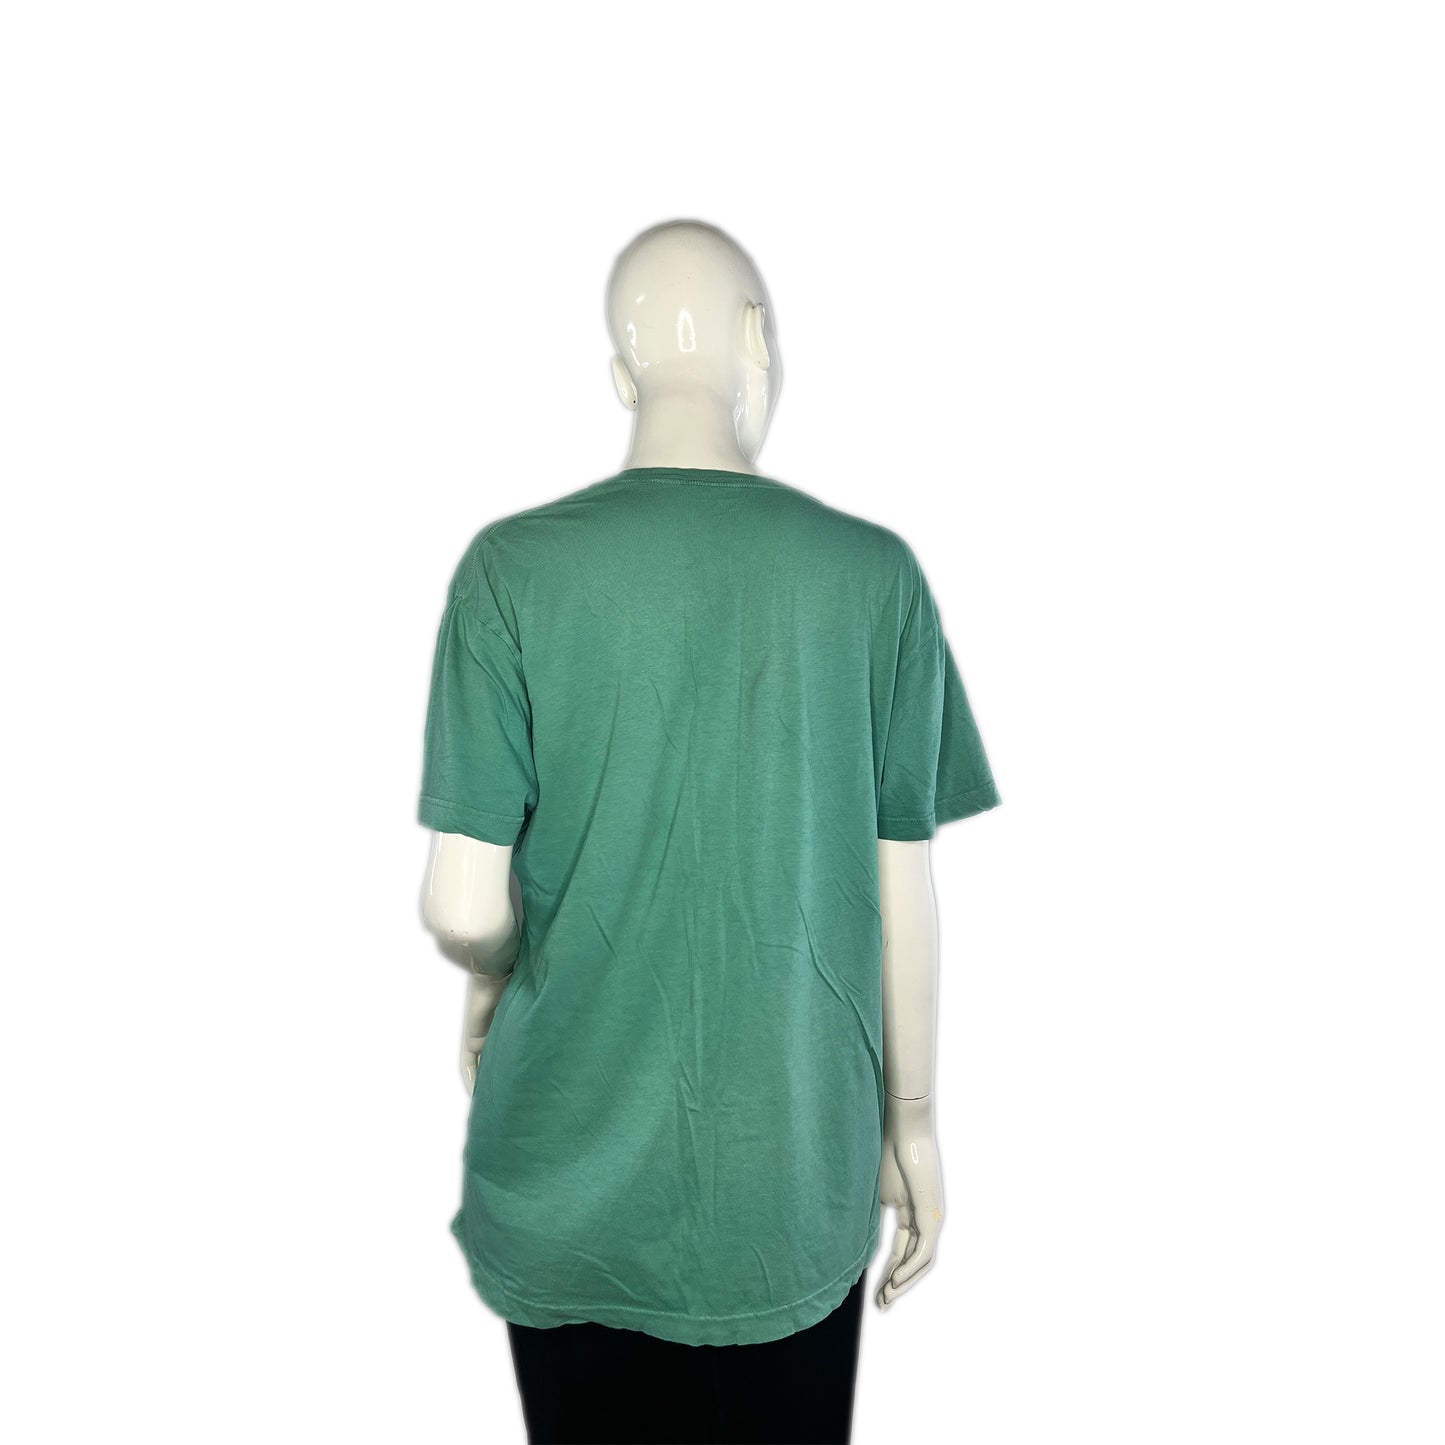 Guess Top Short Sleeve Tee Sage-Green Size M SKU 000267-8